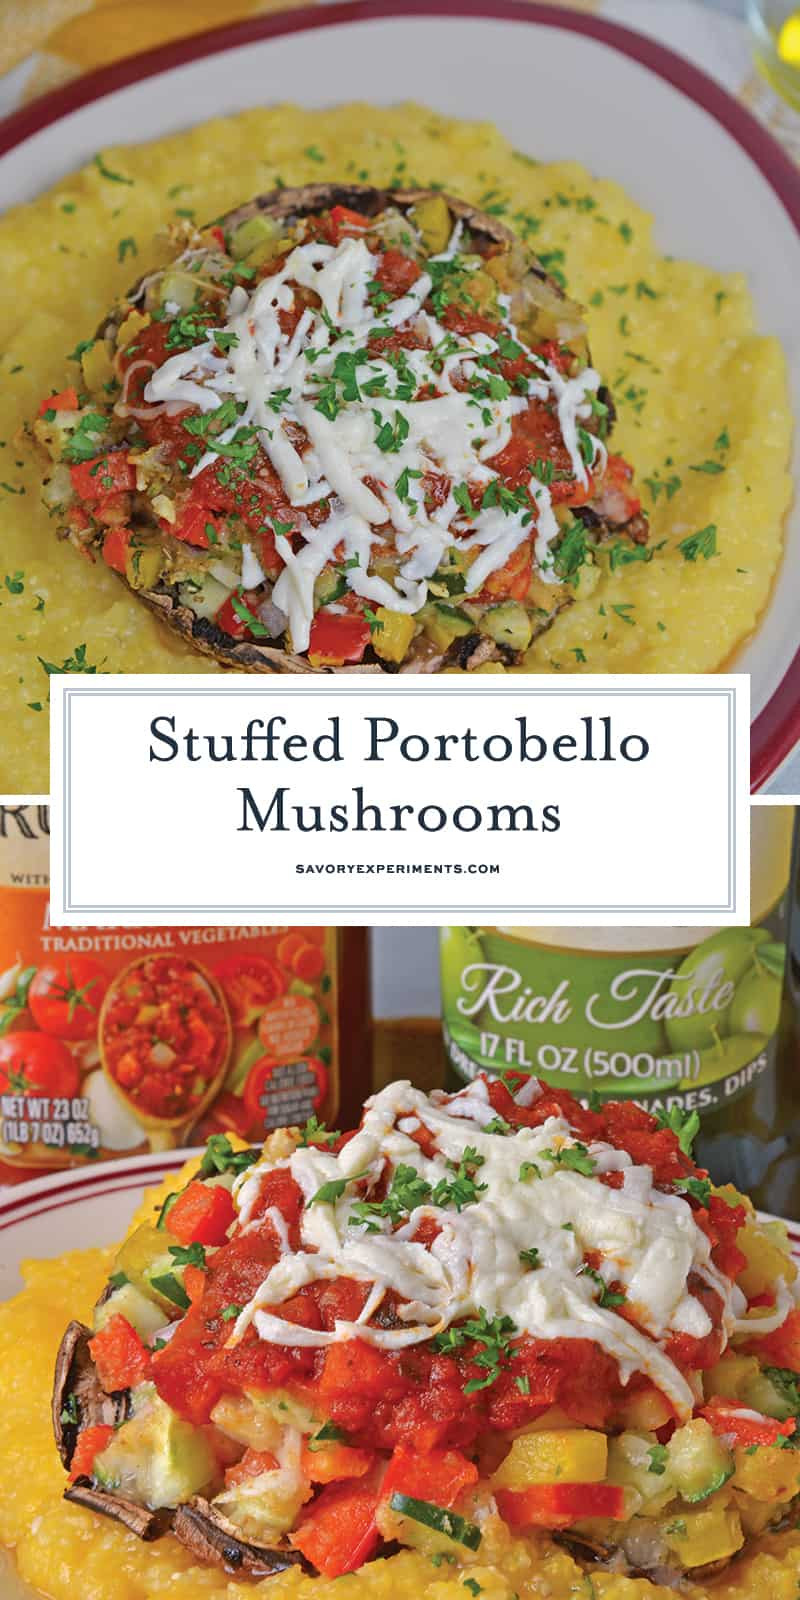 Portabella Mushroom Recipes Vegetarian
 Stuffed Portabella Mushrooms Ve arian Recipe with